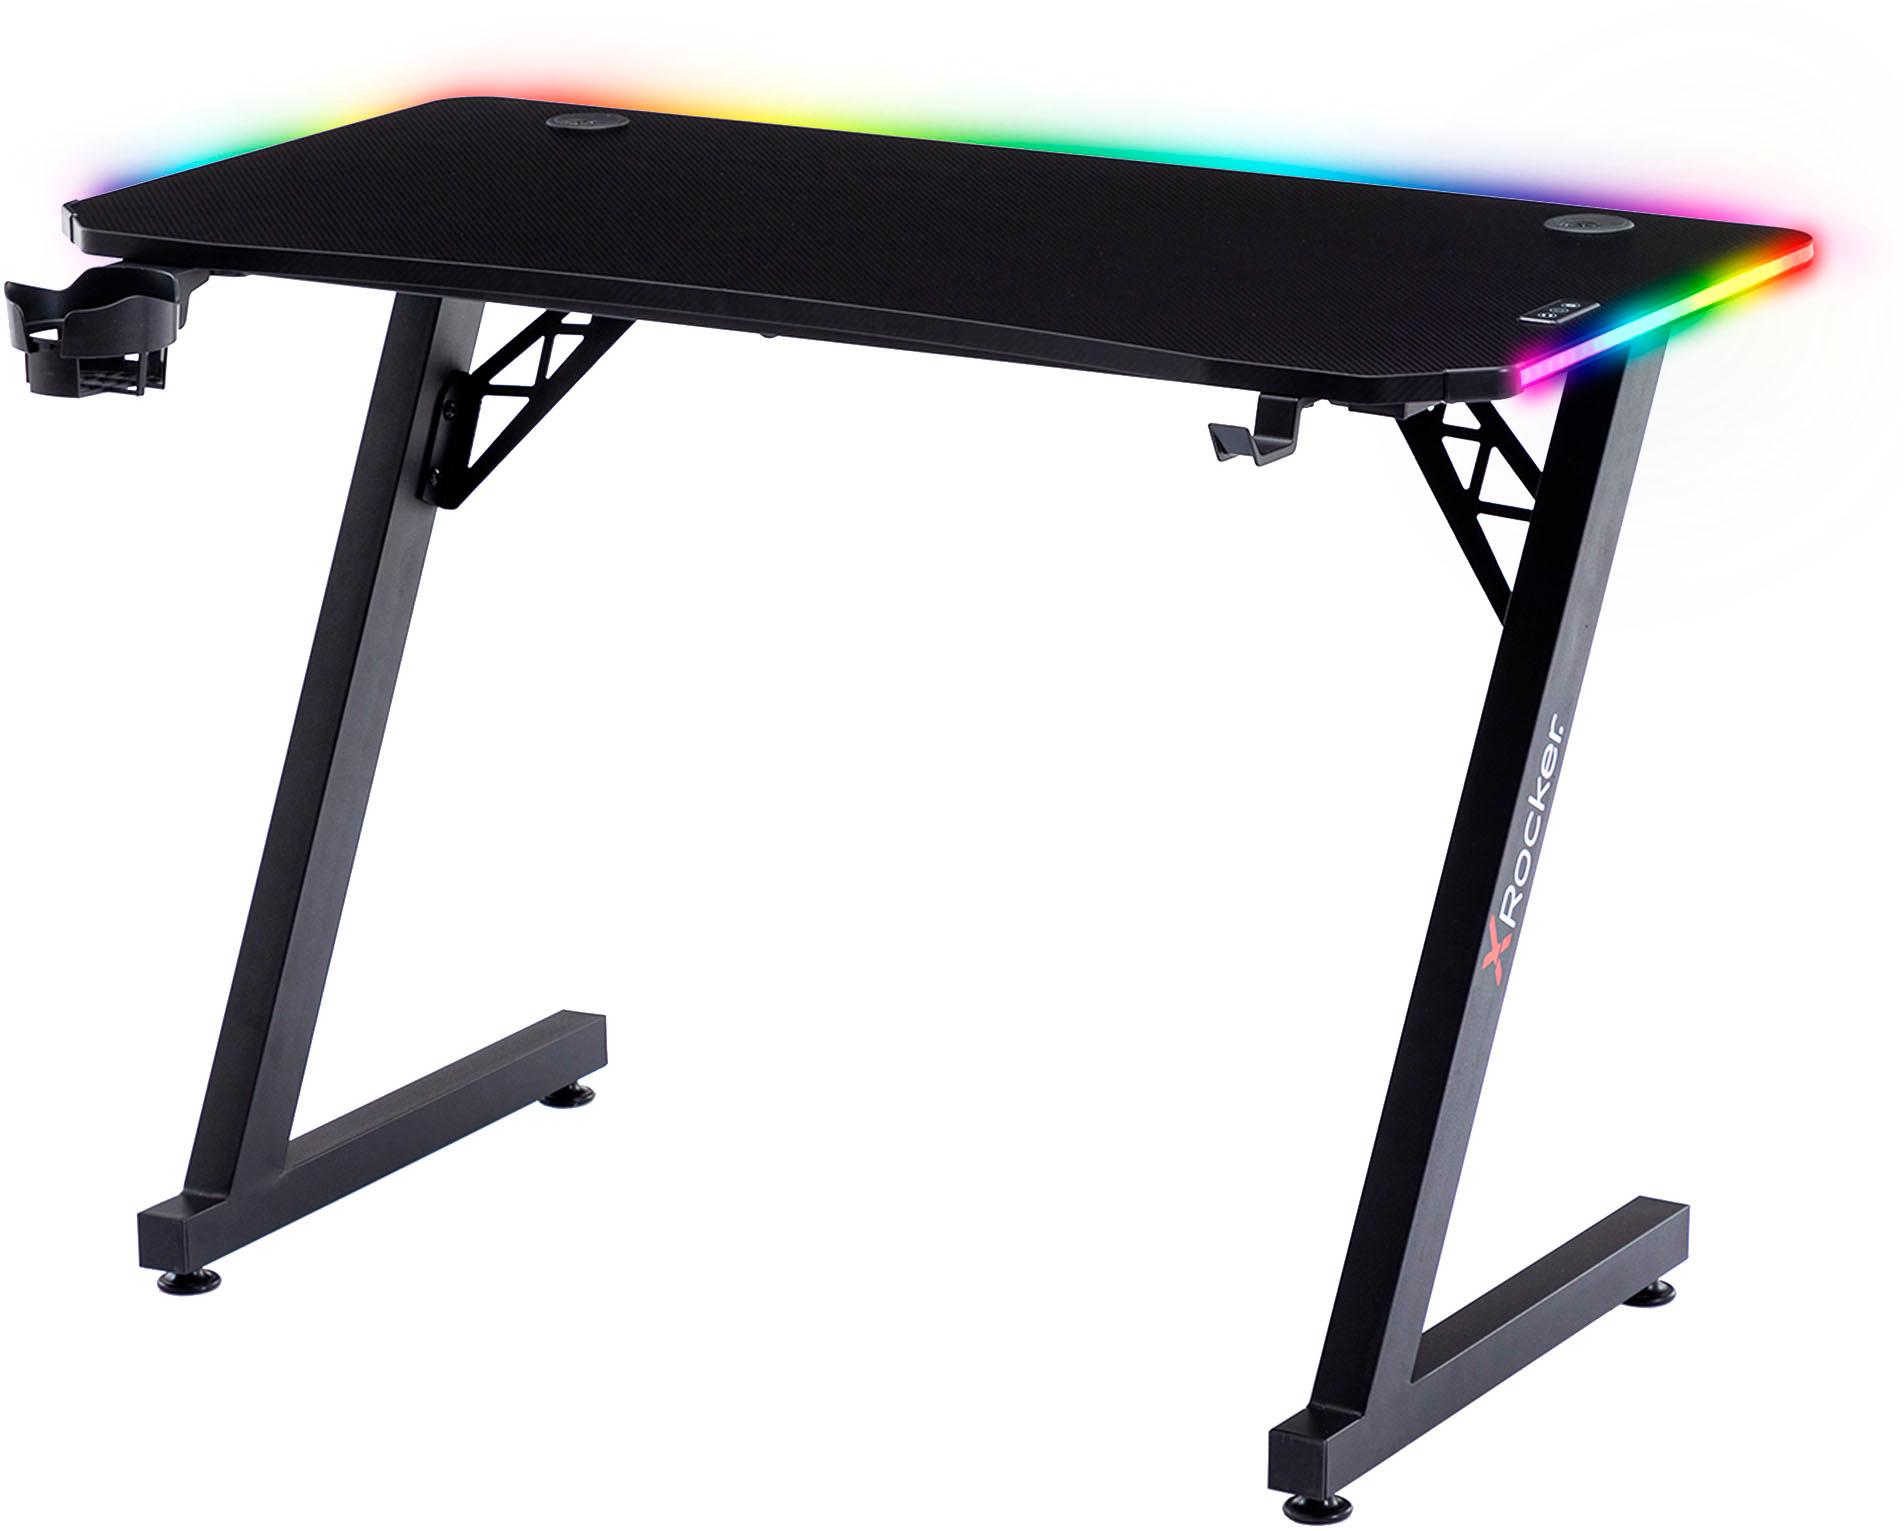 Angle View: X Rocker - Cobra Gaming Desk with RGB Lighting - Black